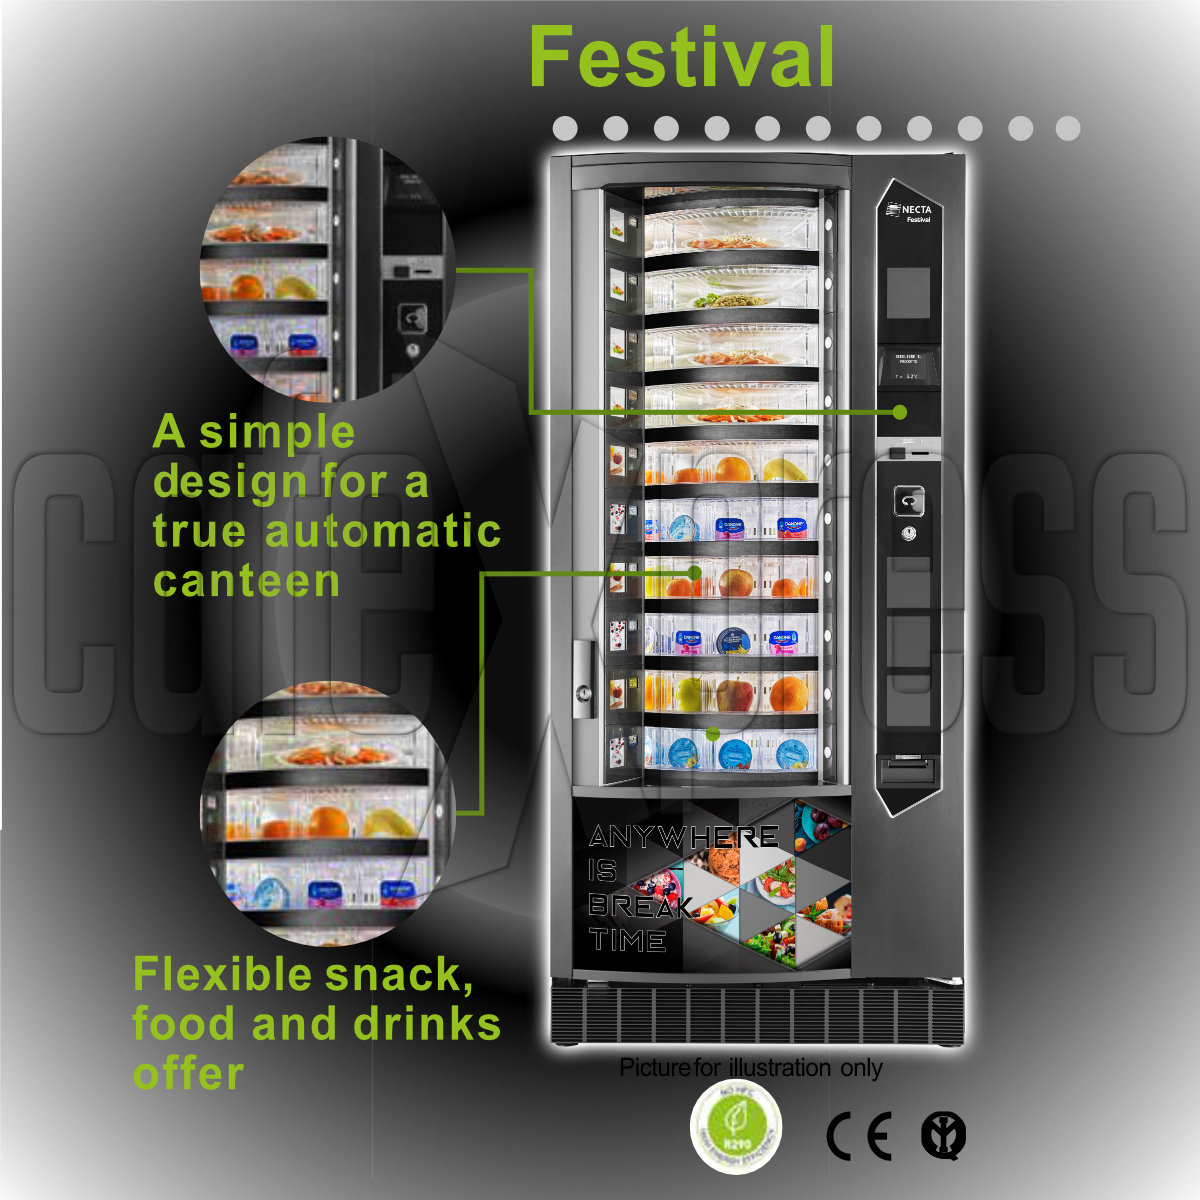 Necta FESTIVAL Carousel Fresh Food Vending Machine